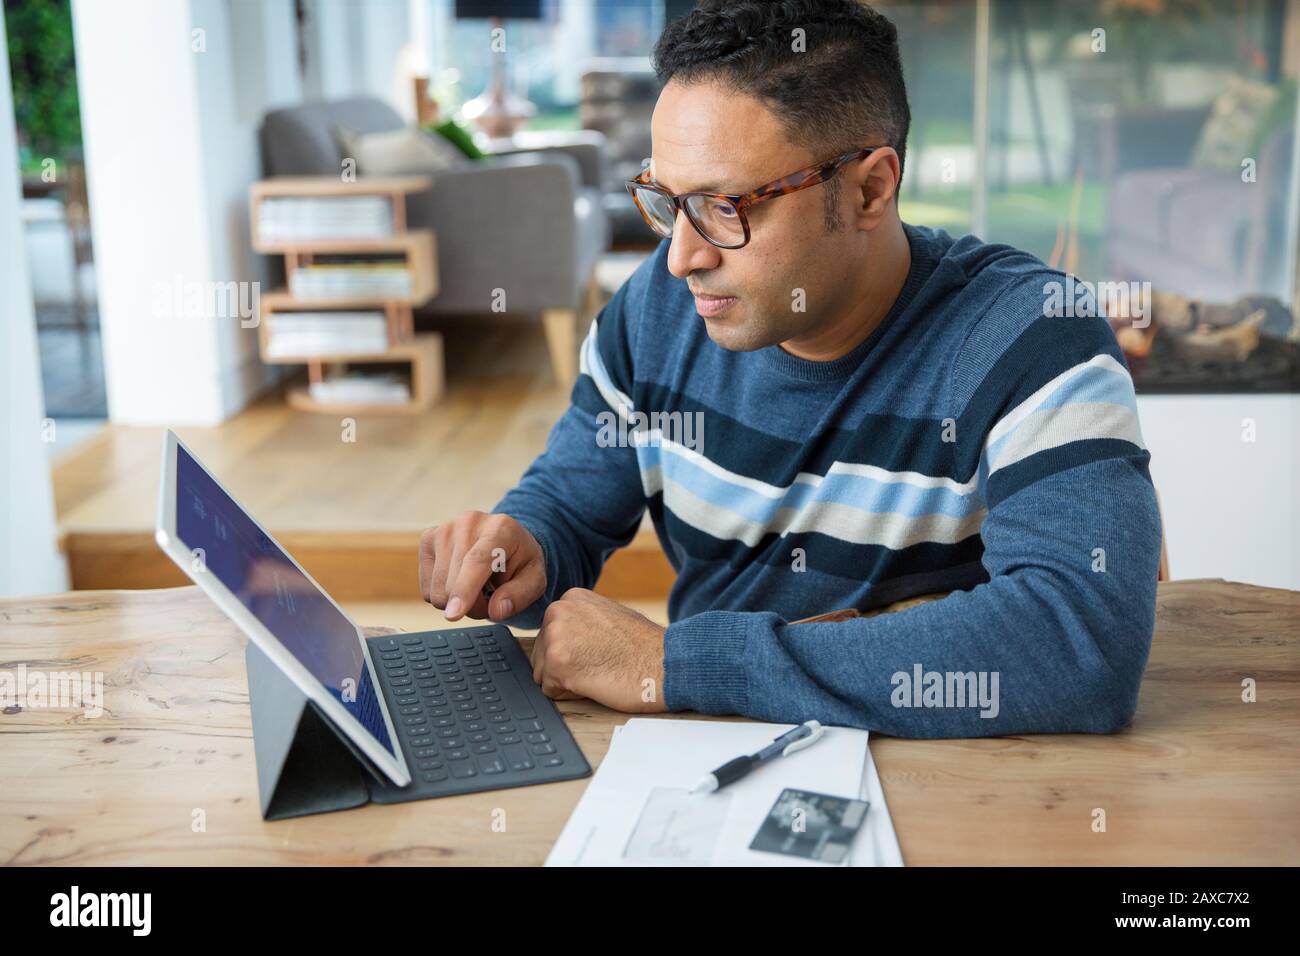 Focused man paying bills at digital tablet Stock Photo